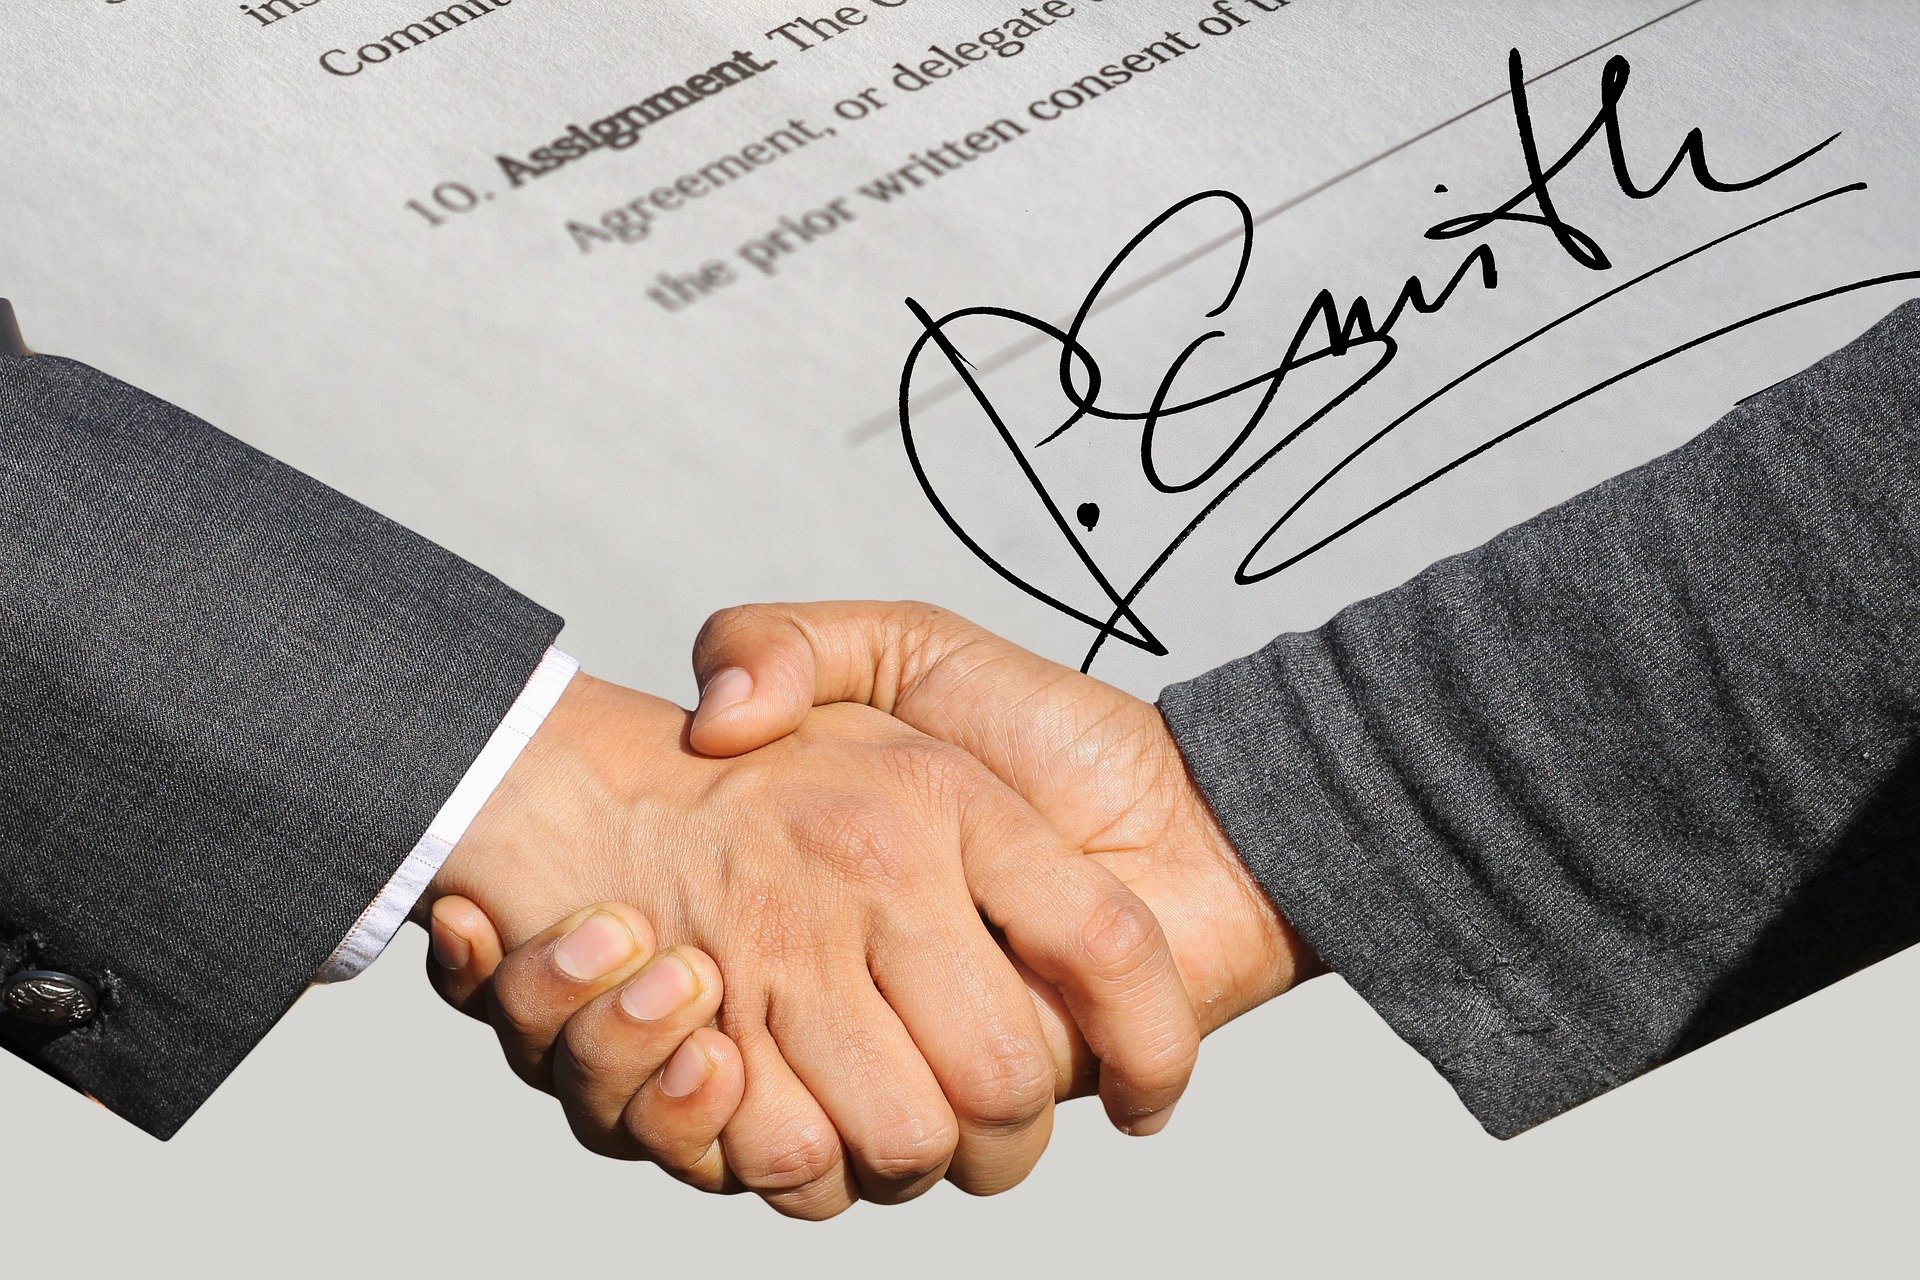 Independent Contractor Agreement